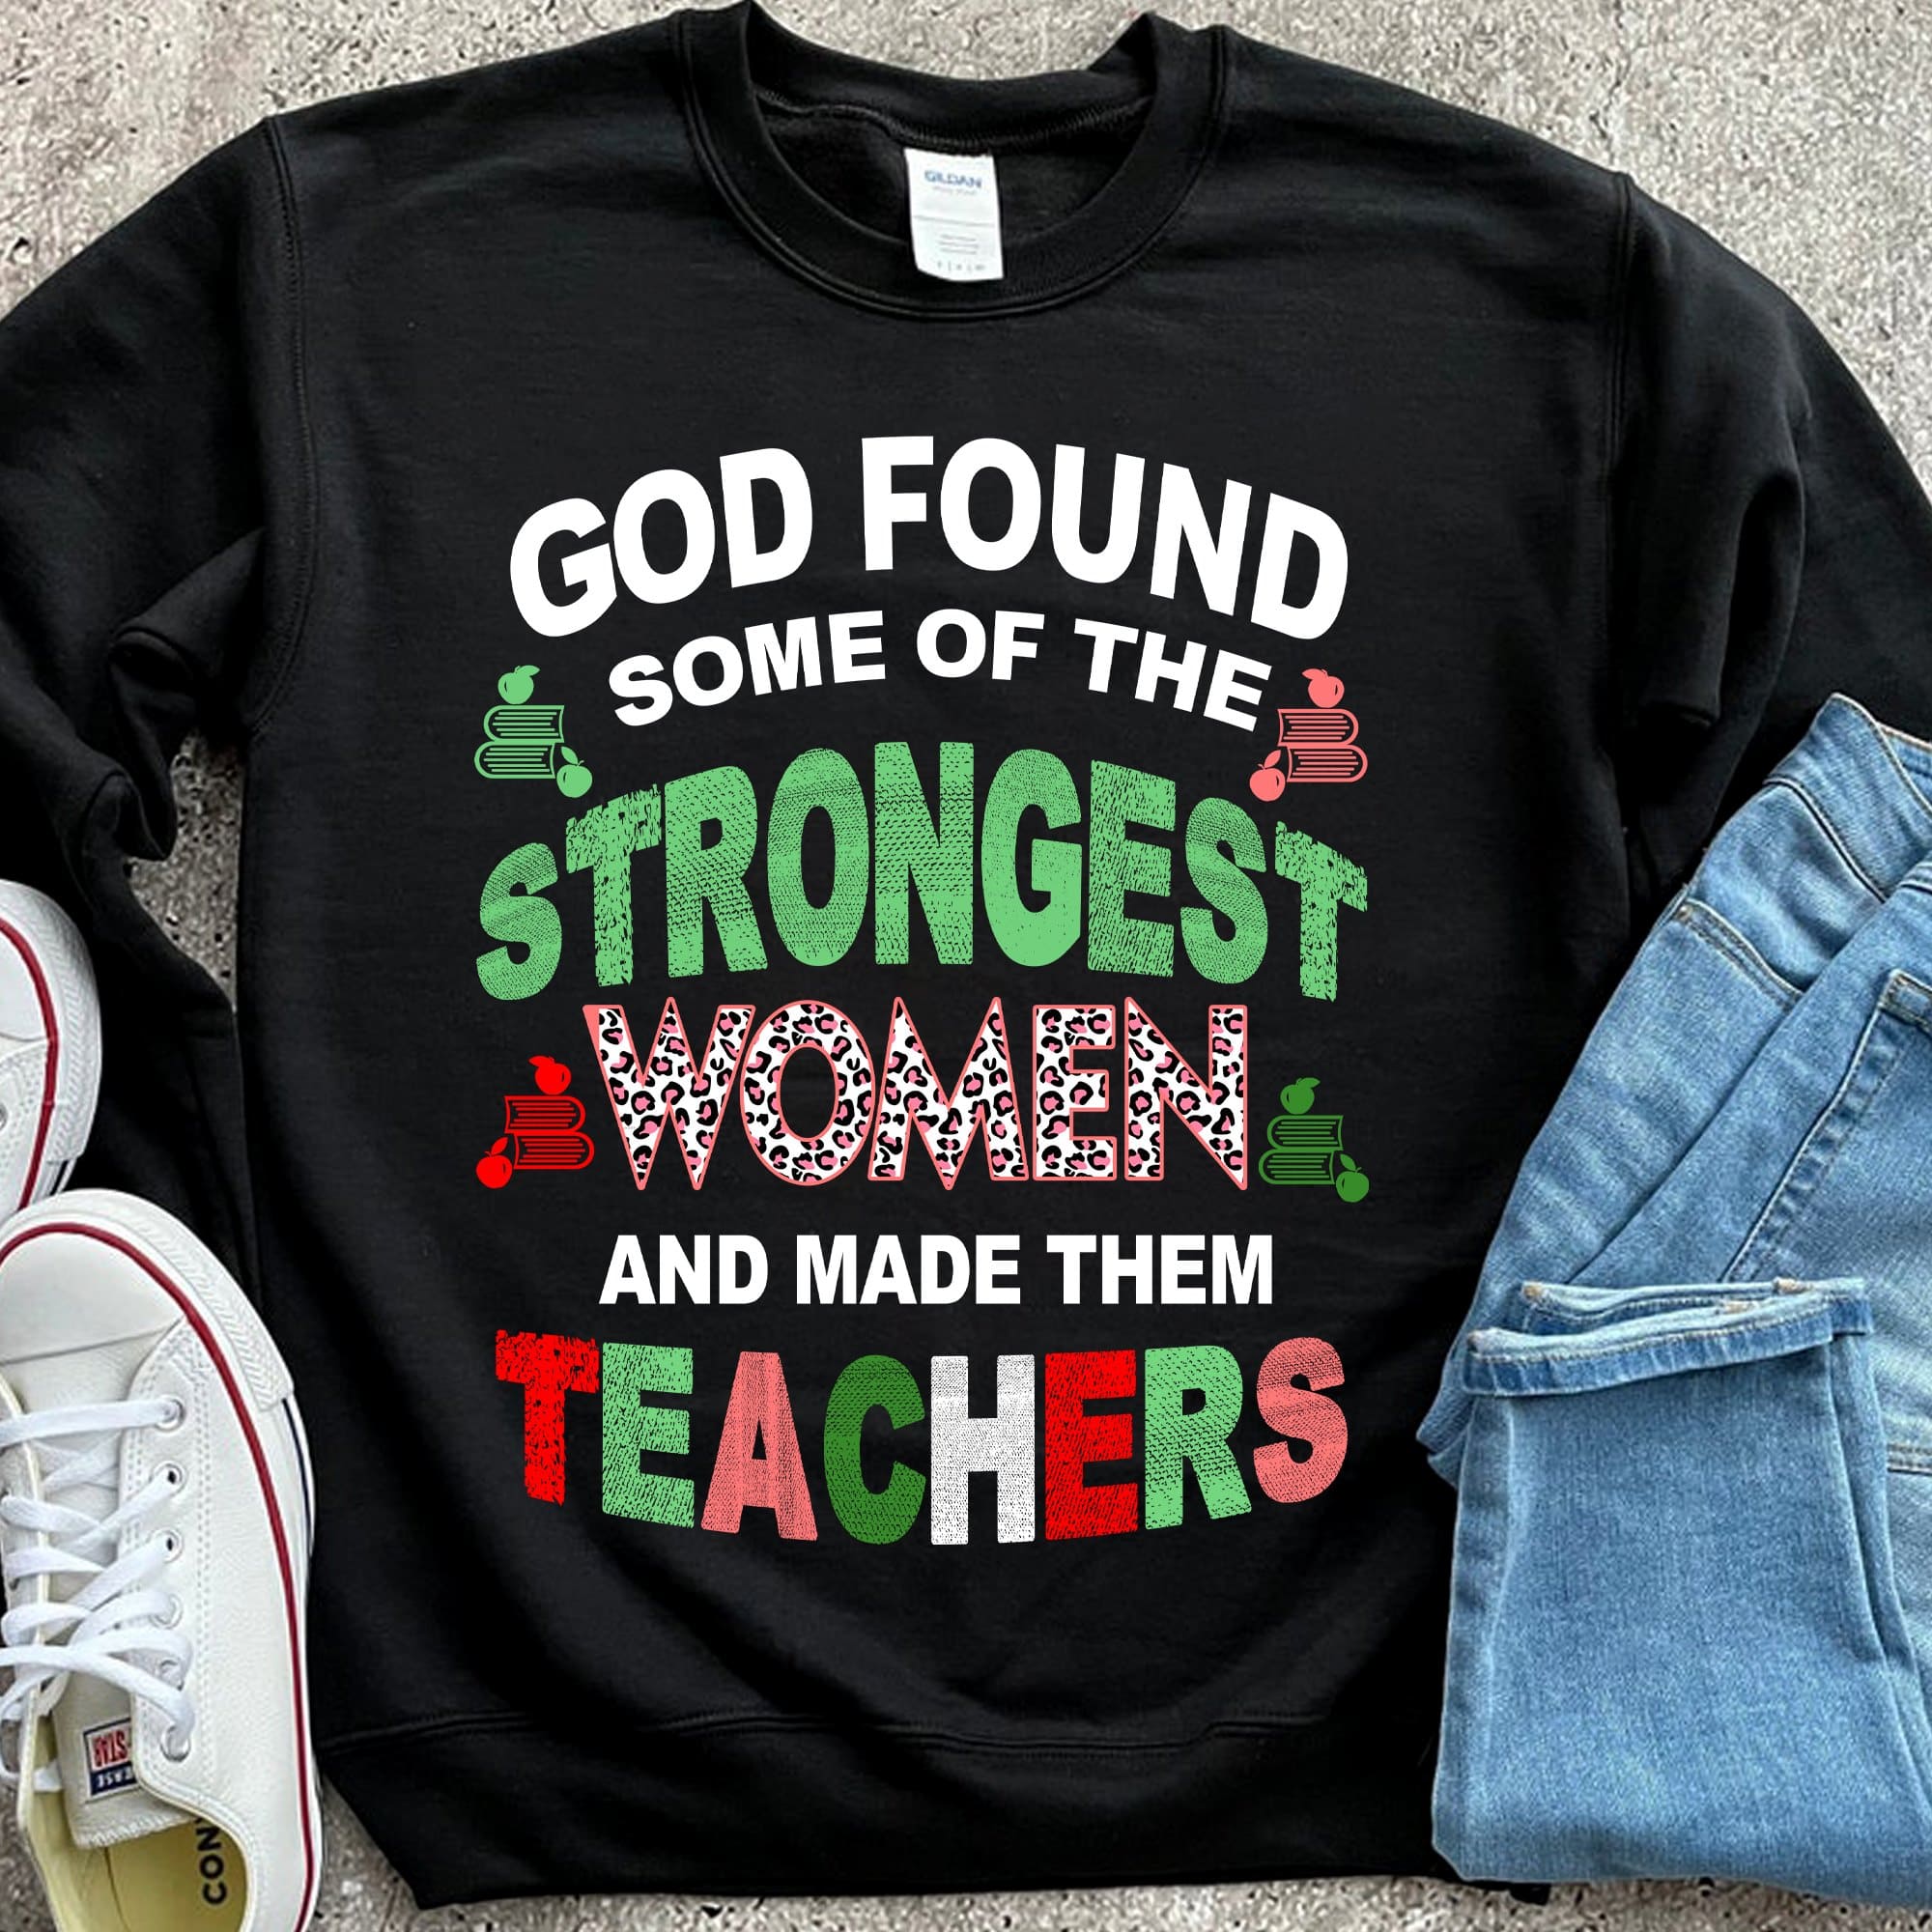 God found some of the strongest women and made them teachers - T-shirt for teacher, teacher educational job